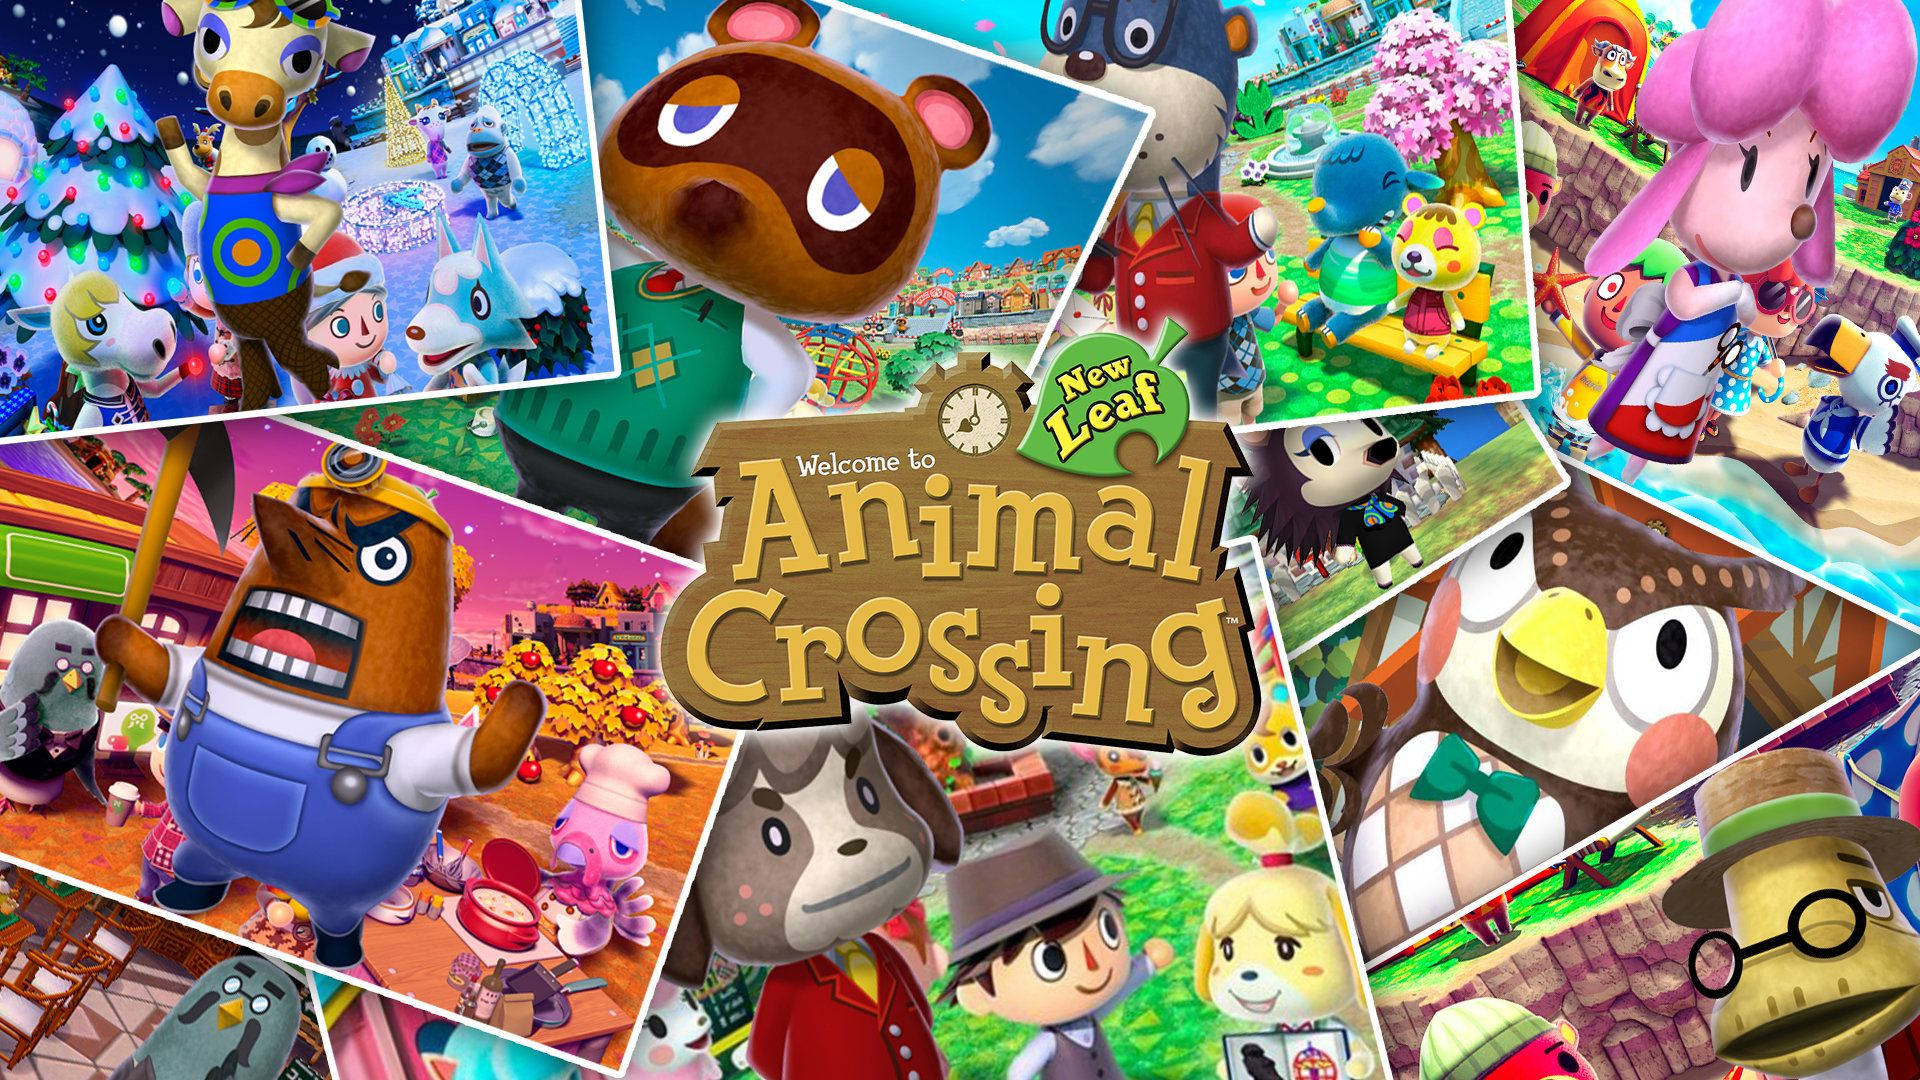 Cool Hd Animal Crossing Poster Wallpaper